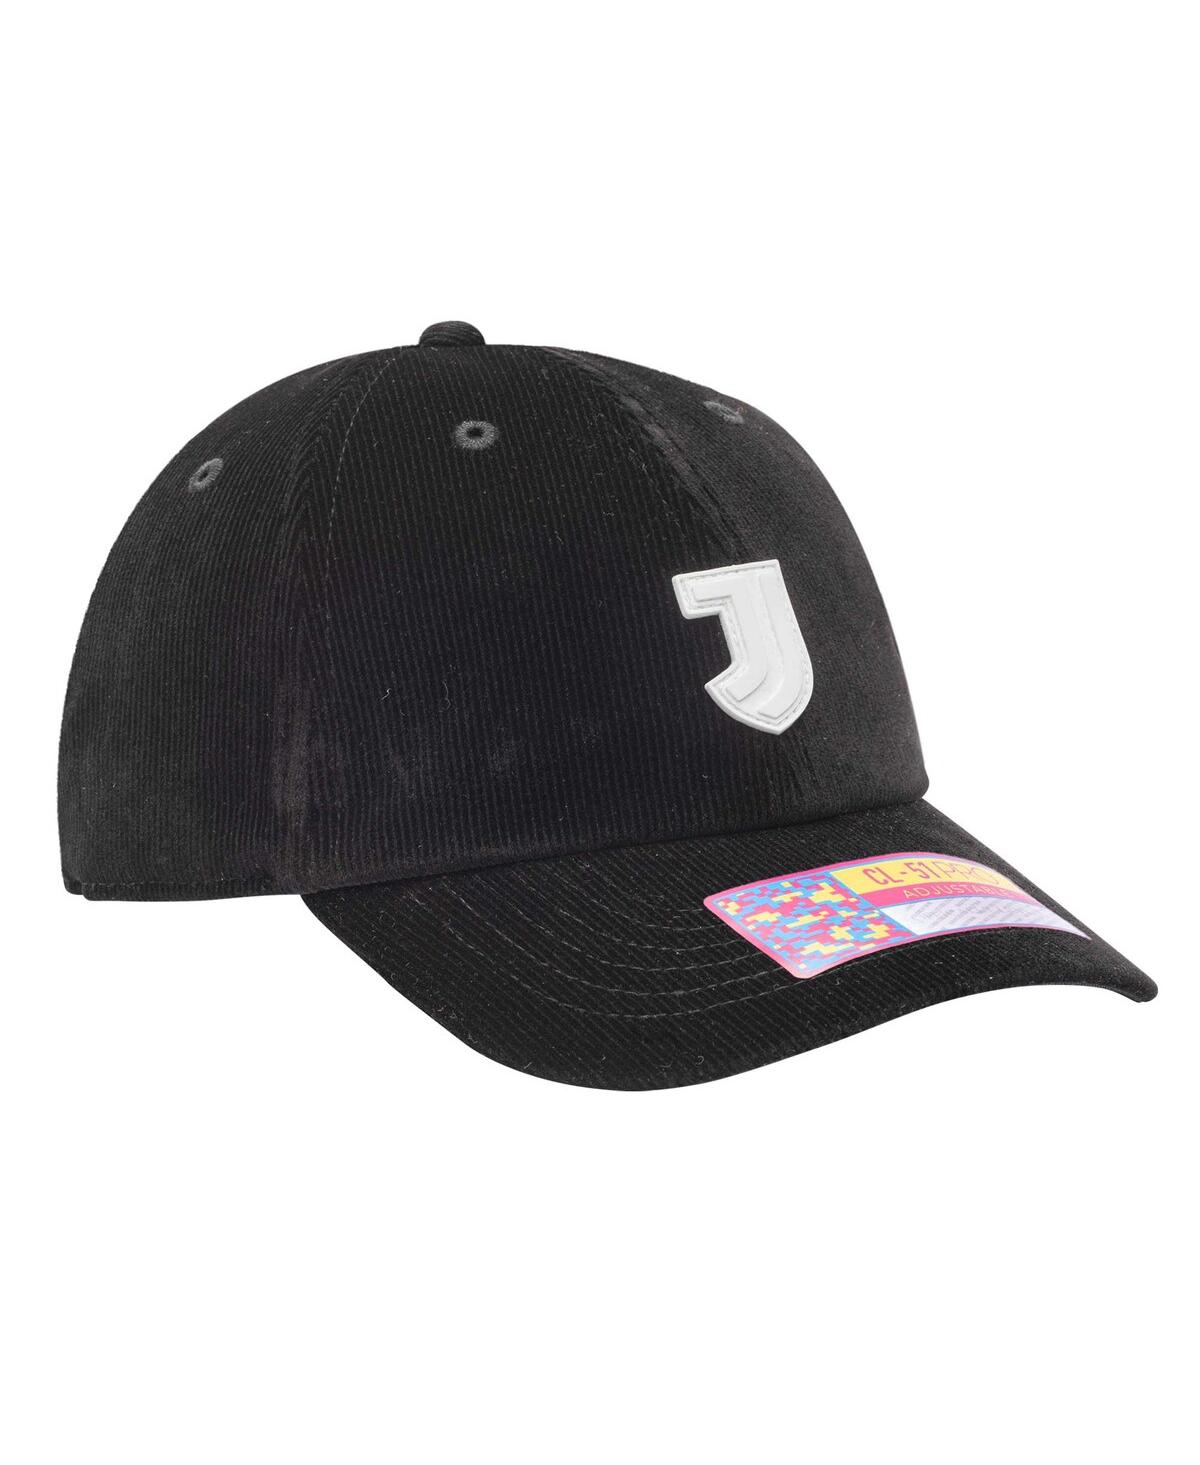 Shop Fan Ink Men's Black Juventus Casuals Classic Adjustable Hat